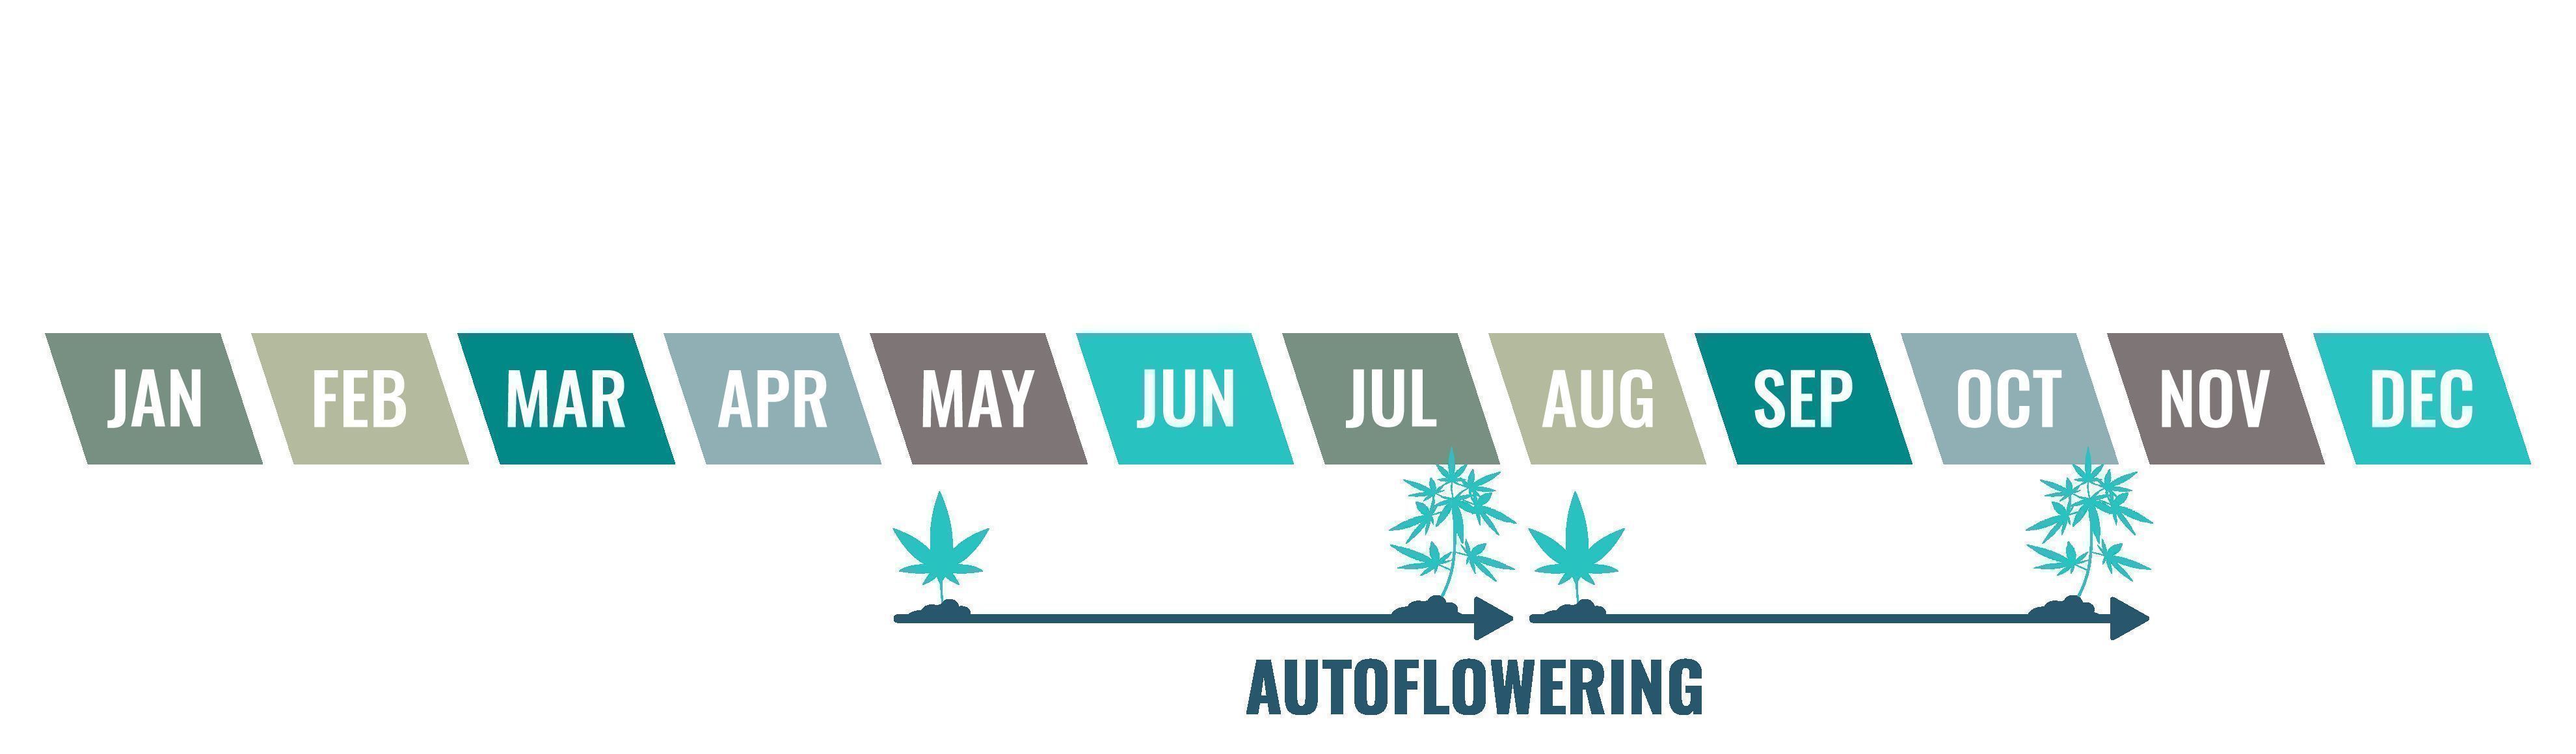 Autoflowering Cannabis Grows Fast